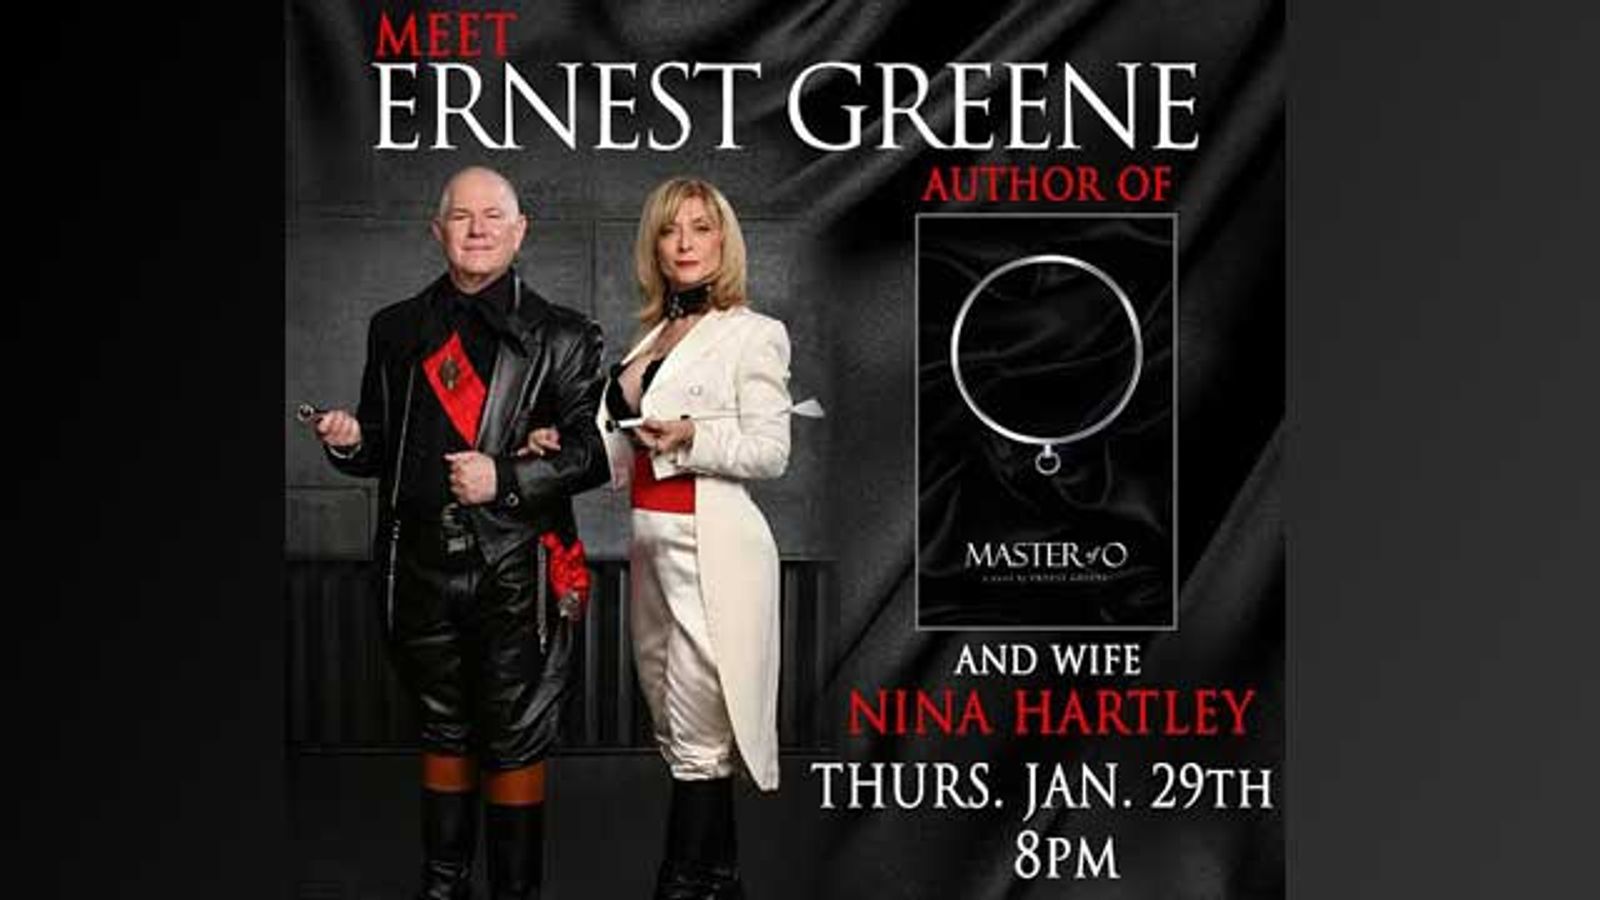 Nina Hartley & Ernest Greene to Read 'Master of O,' Host Q&A